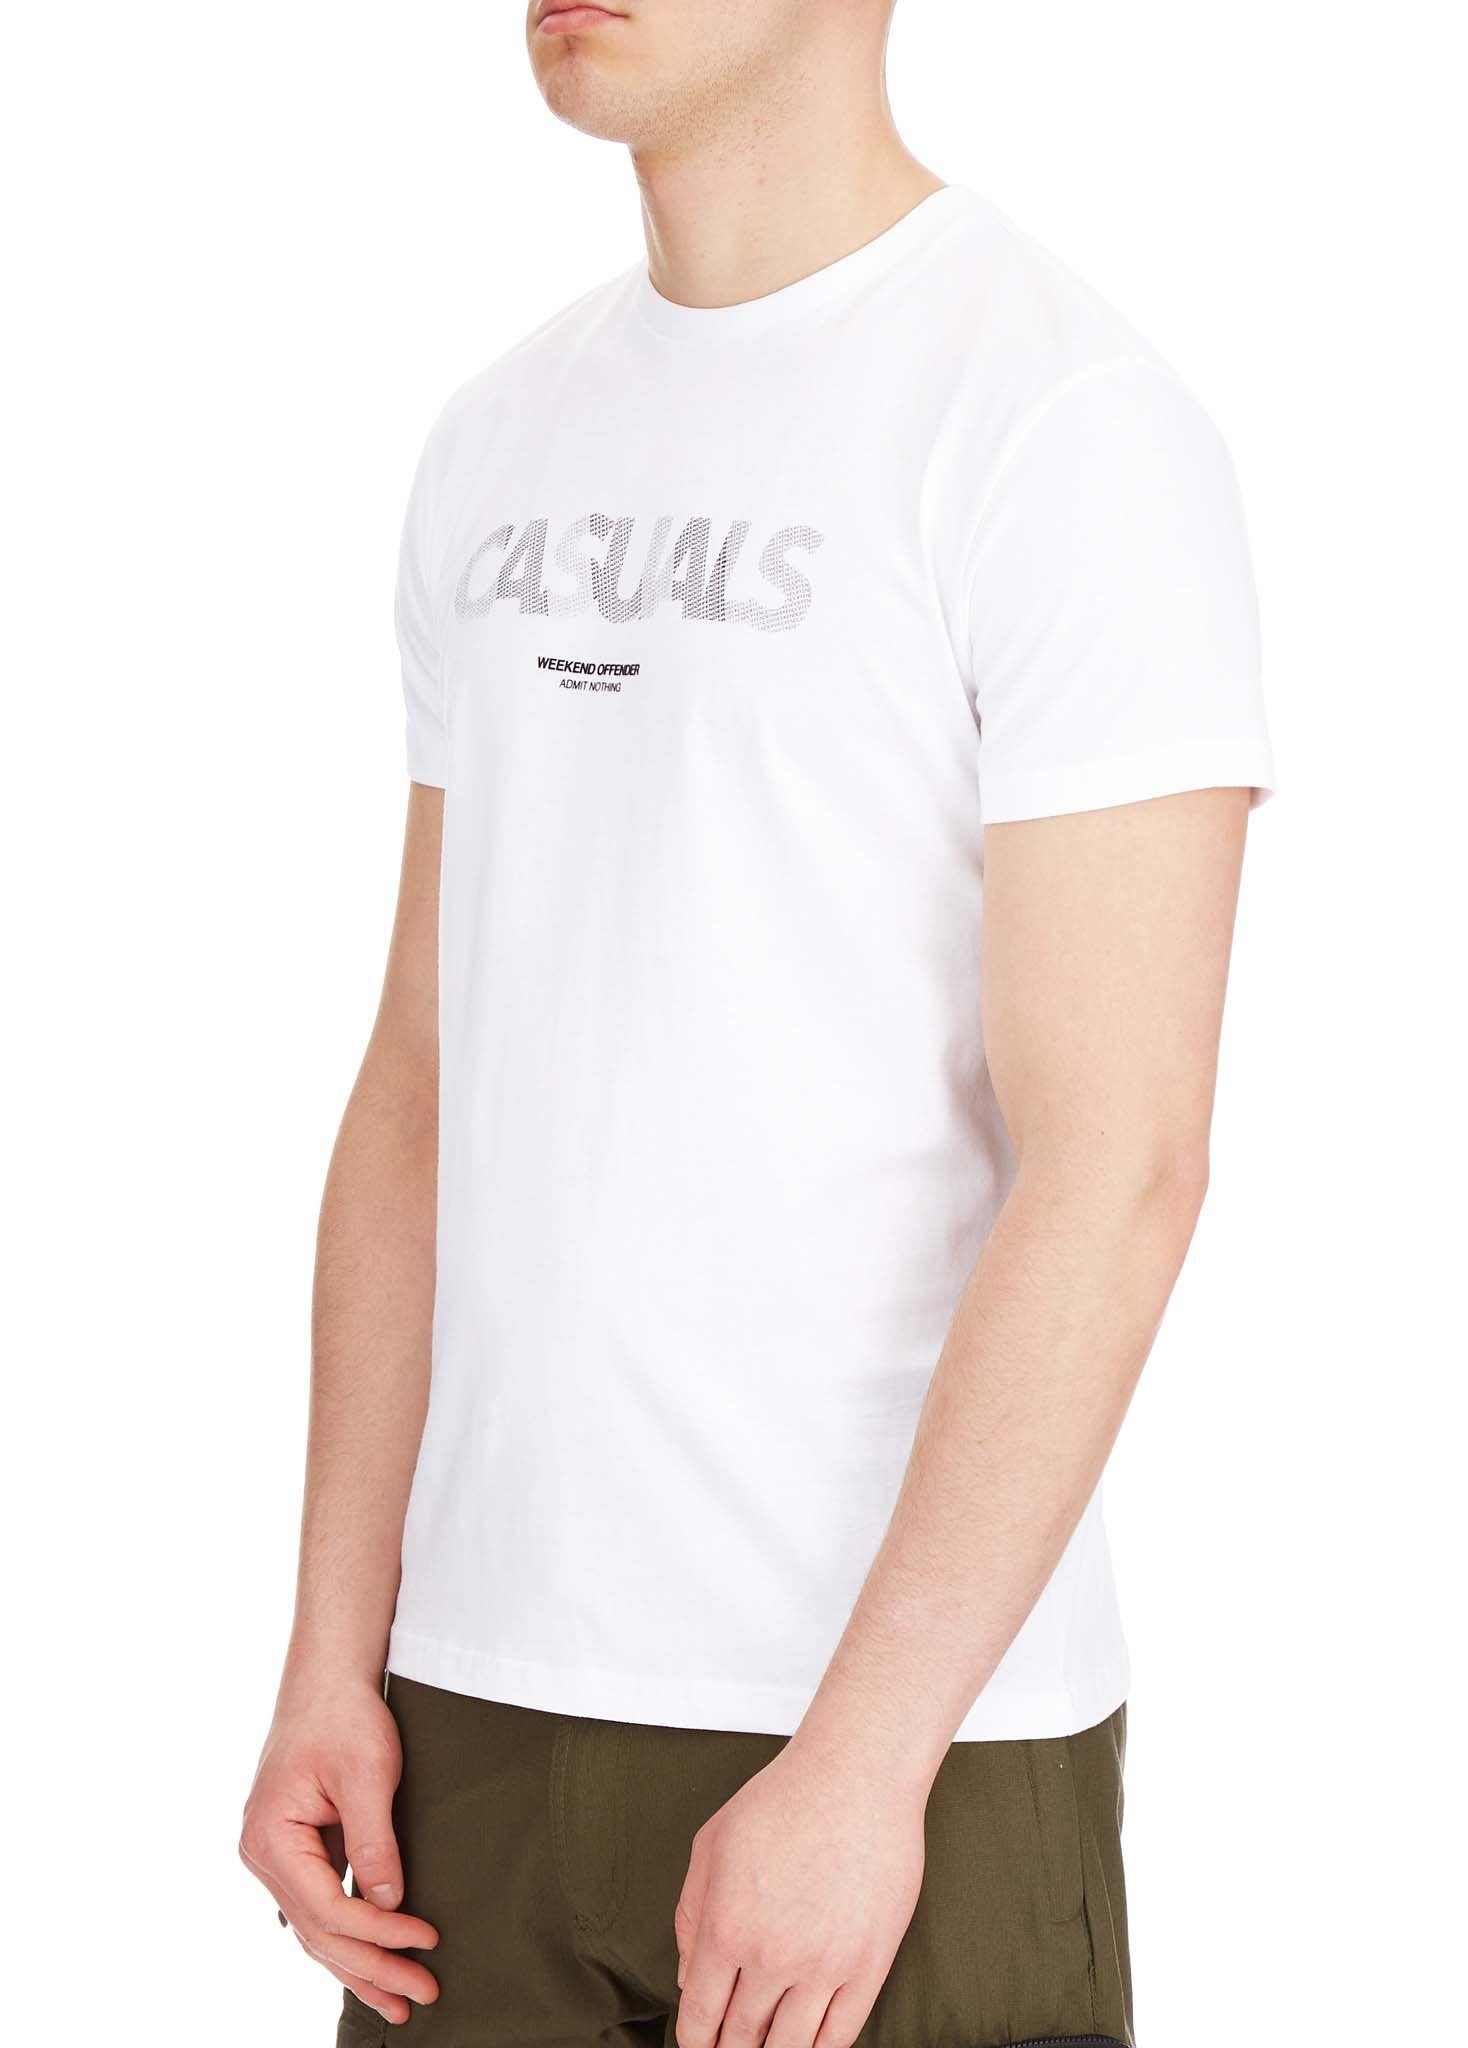 Weekend Offender T-shirts  Dunham - white 